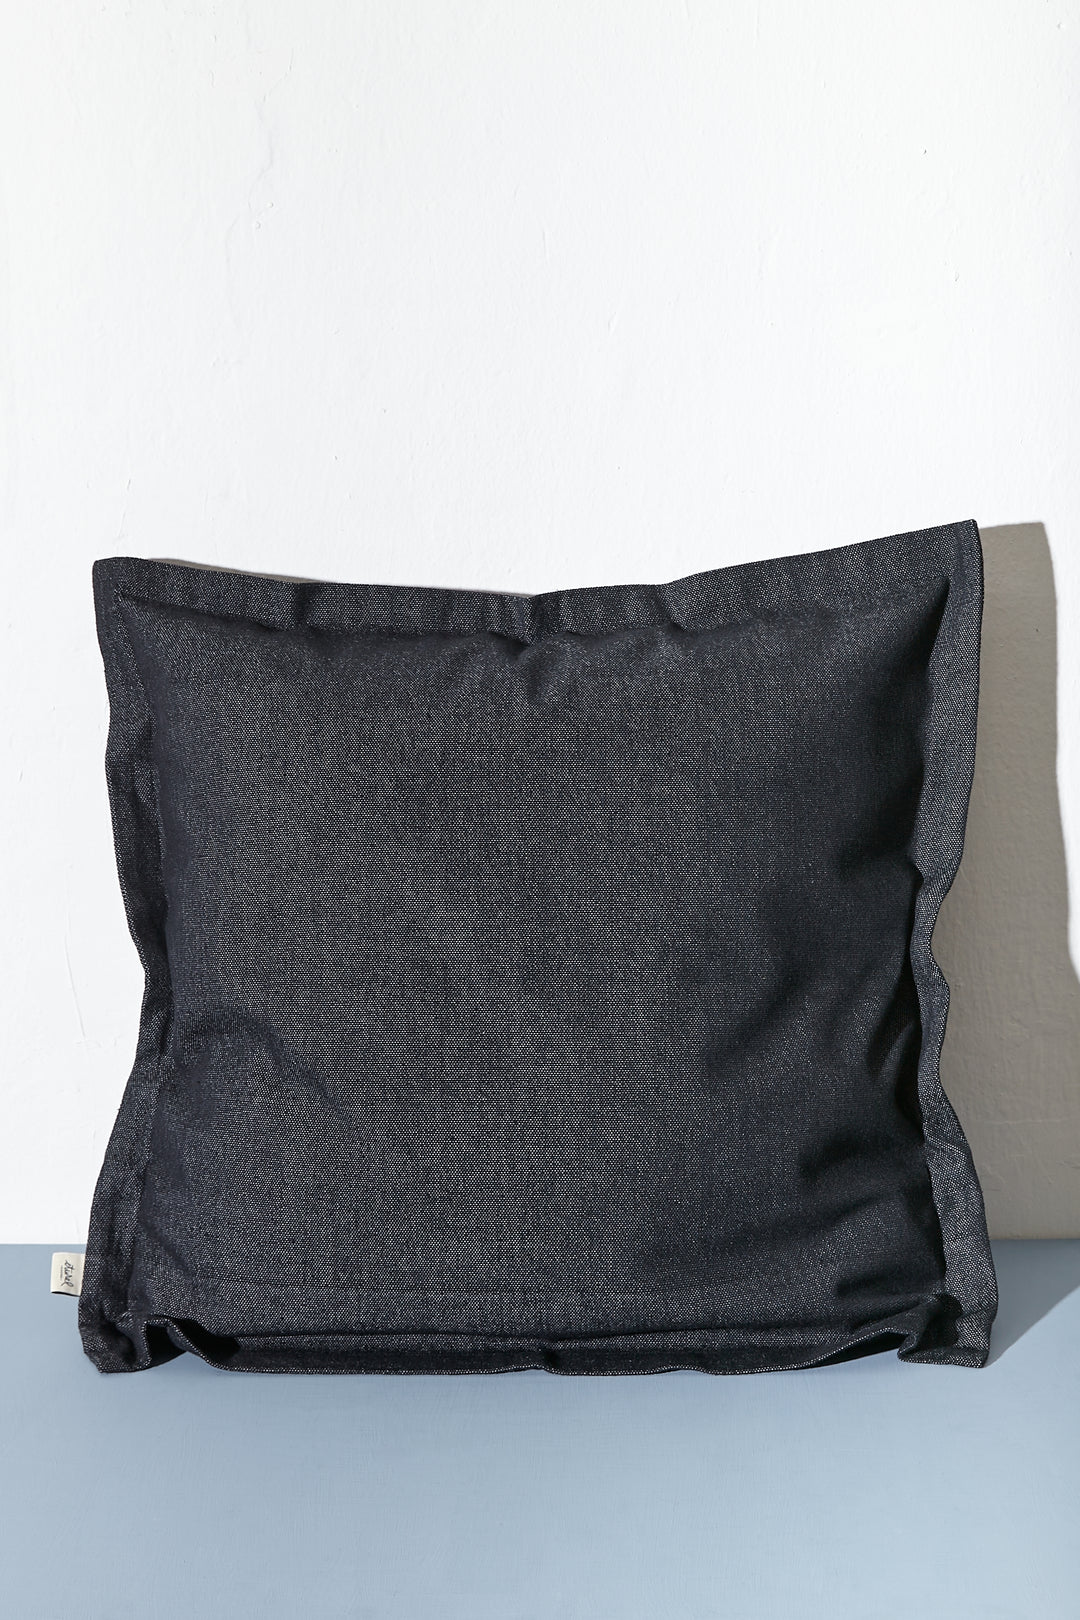 Funda cojín loneta negro 60cmx60cm (Exclusivo online)